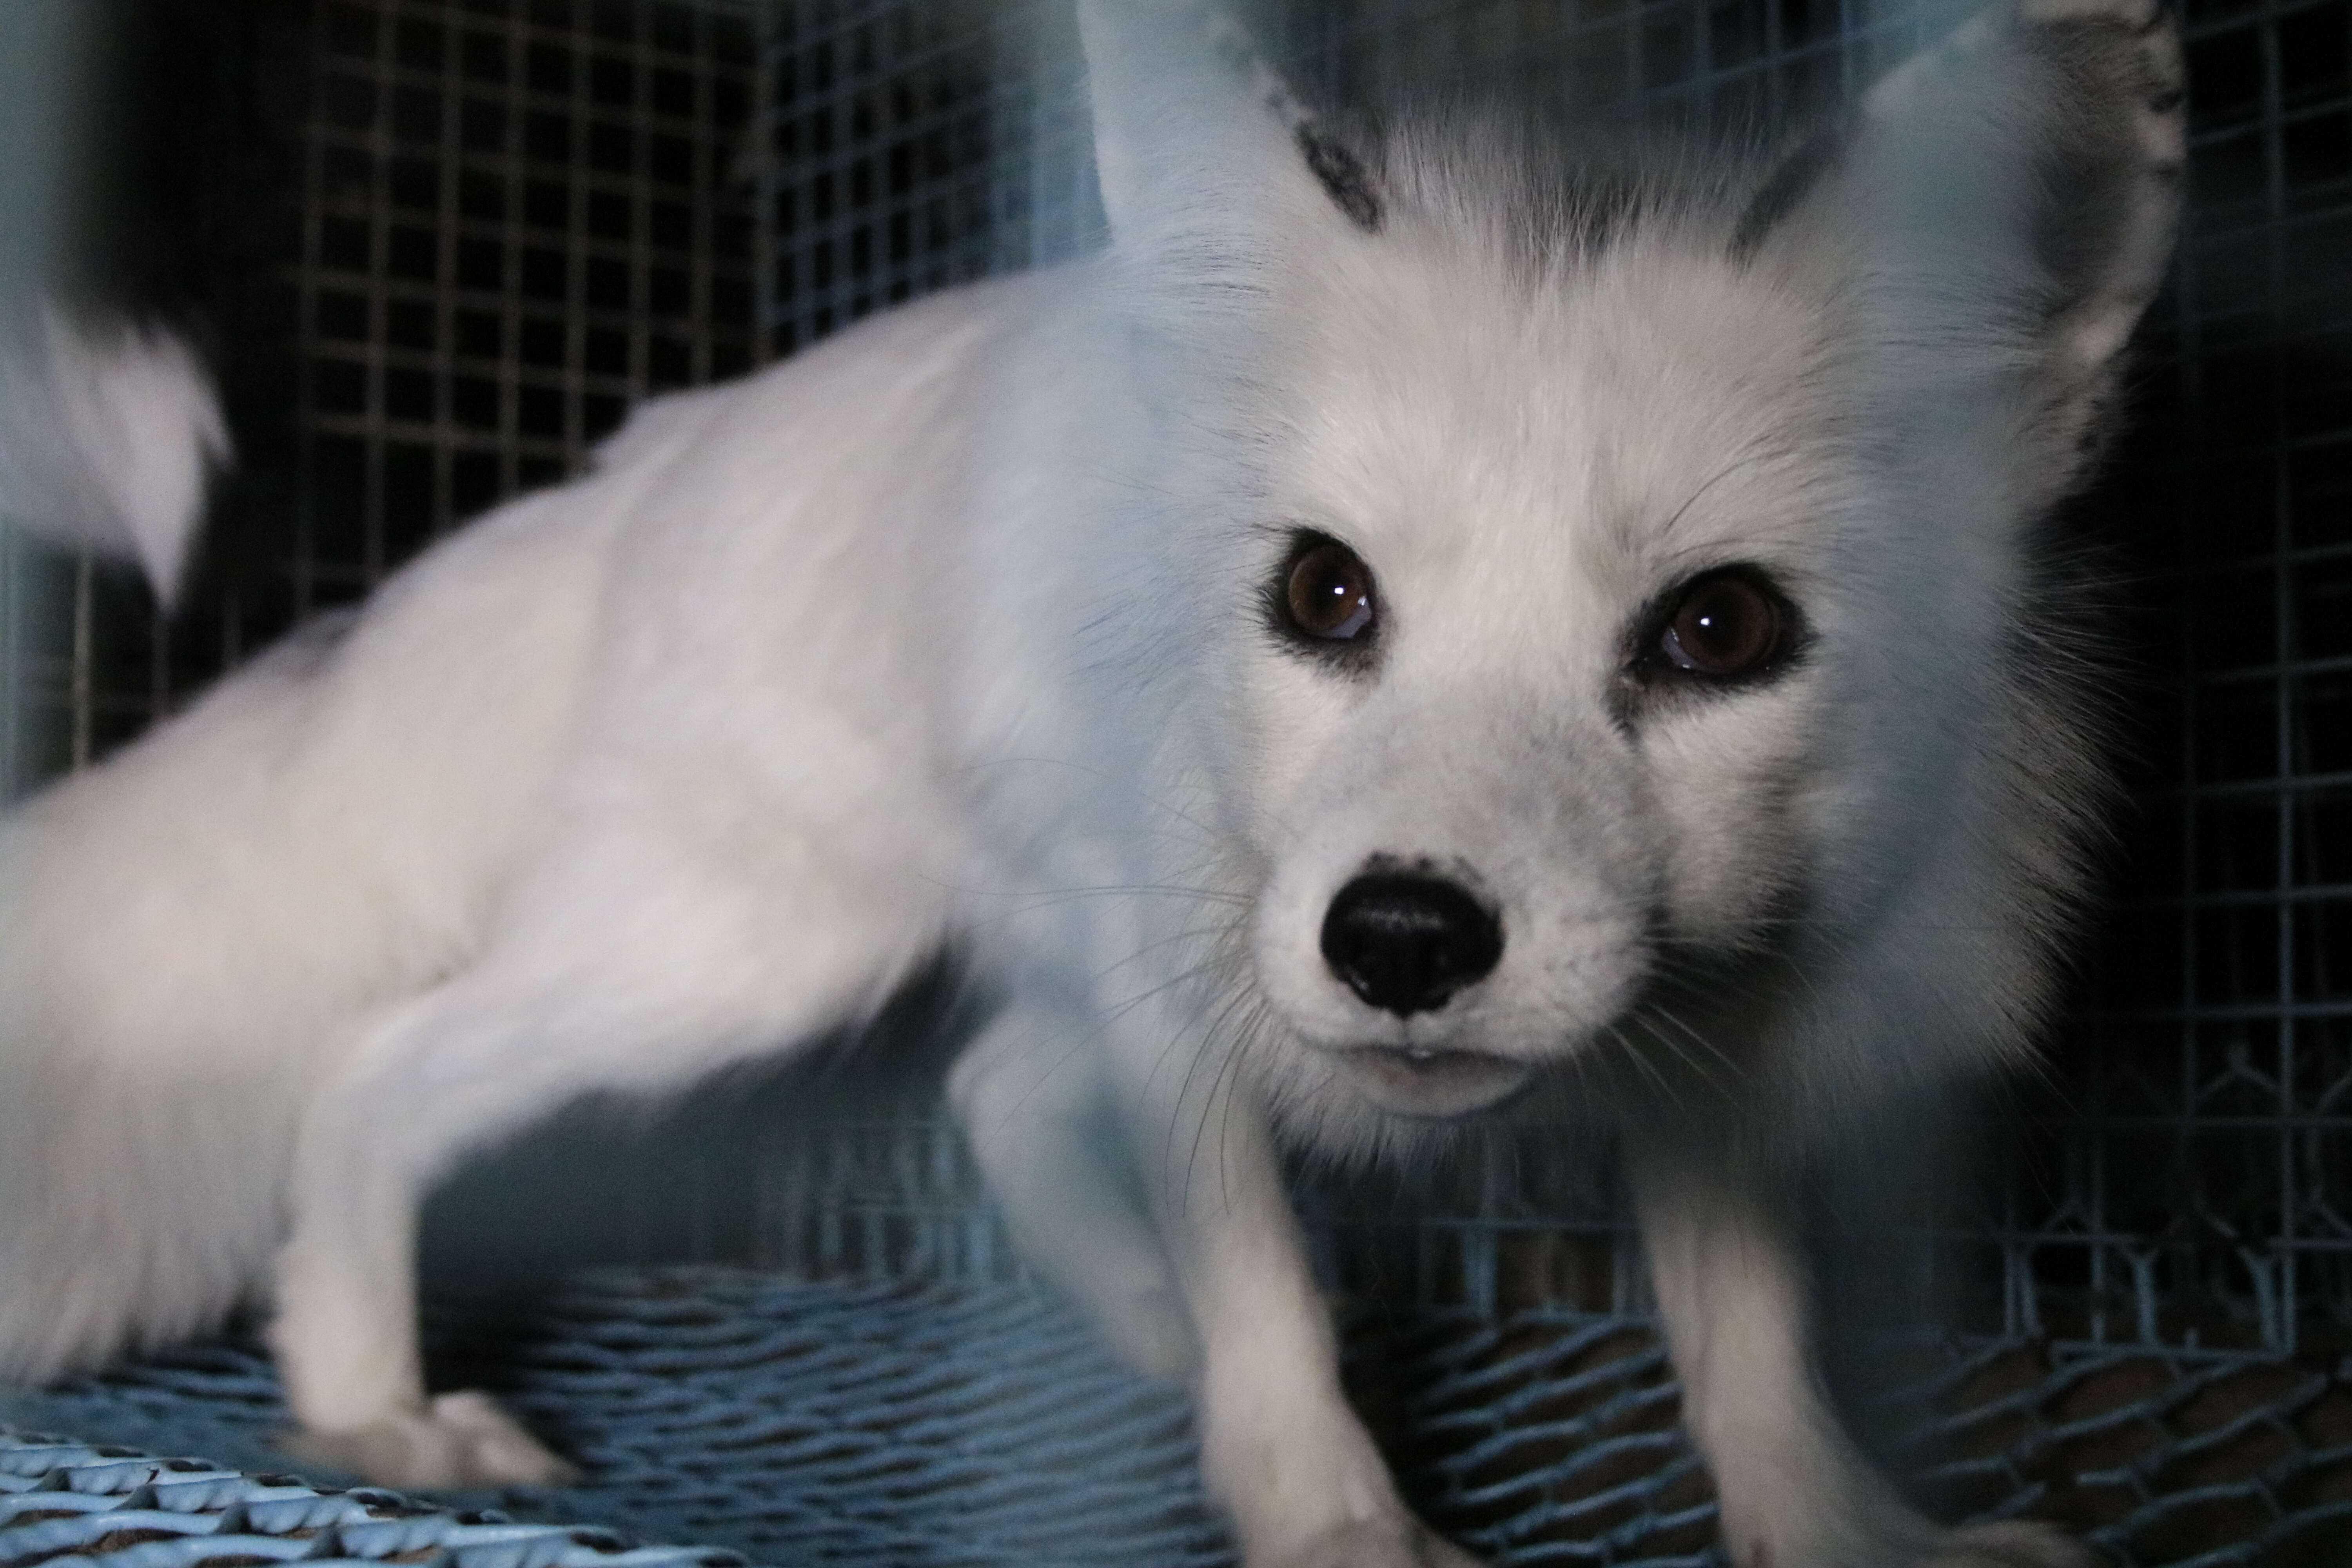 Fox cowering inside cage at fur farm